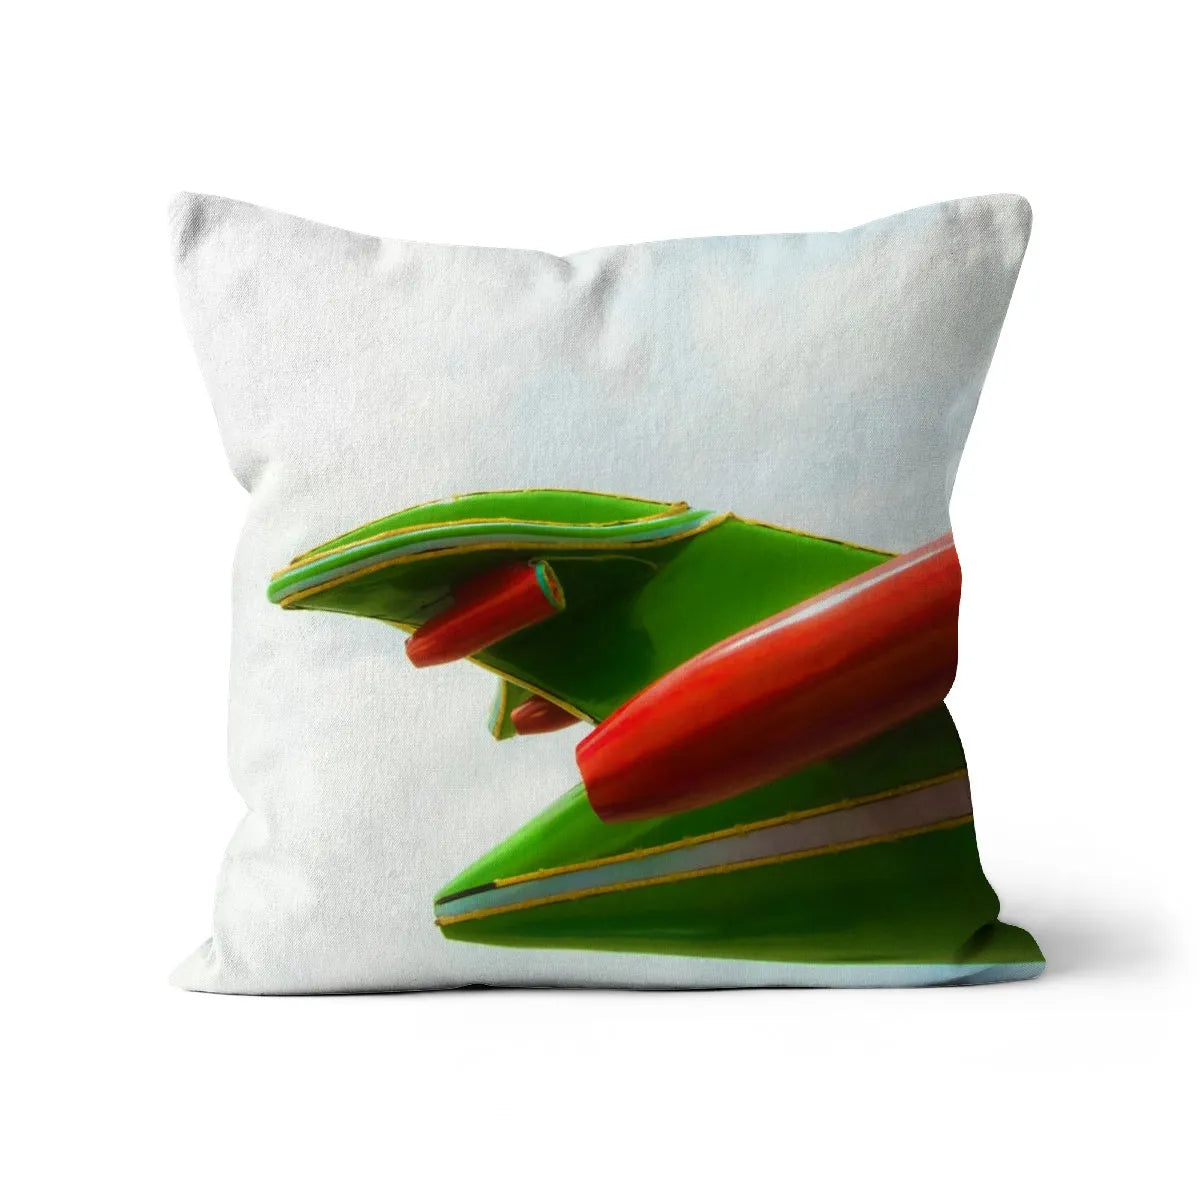 Flying High 3 Cushion - Decorative Throw Pillow - Linen / 18’x18’ - Throw Pillows - Aesthetic Art